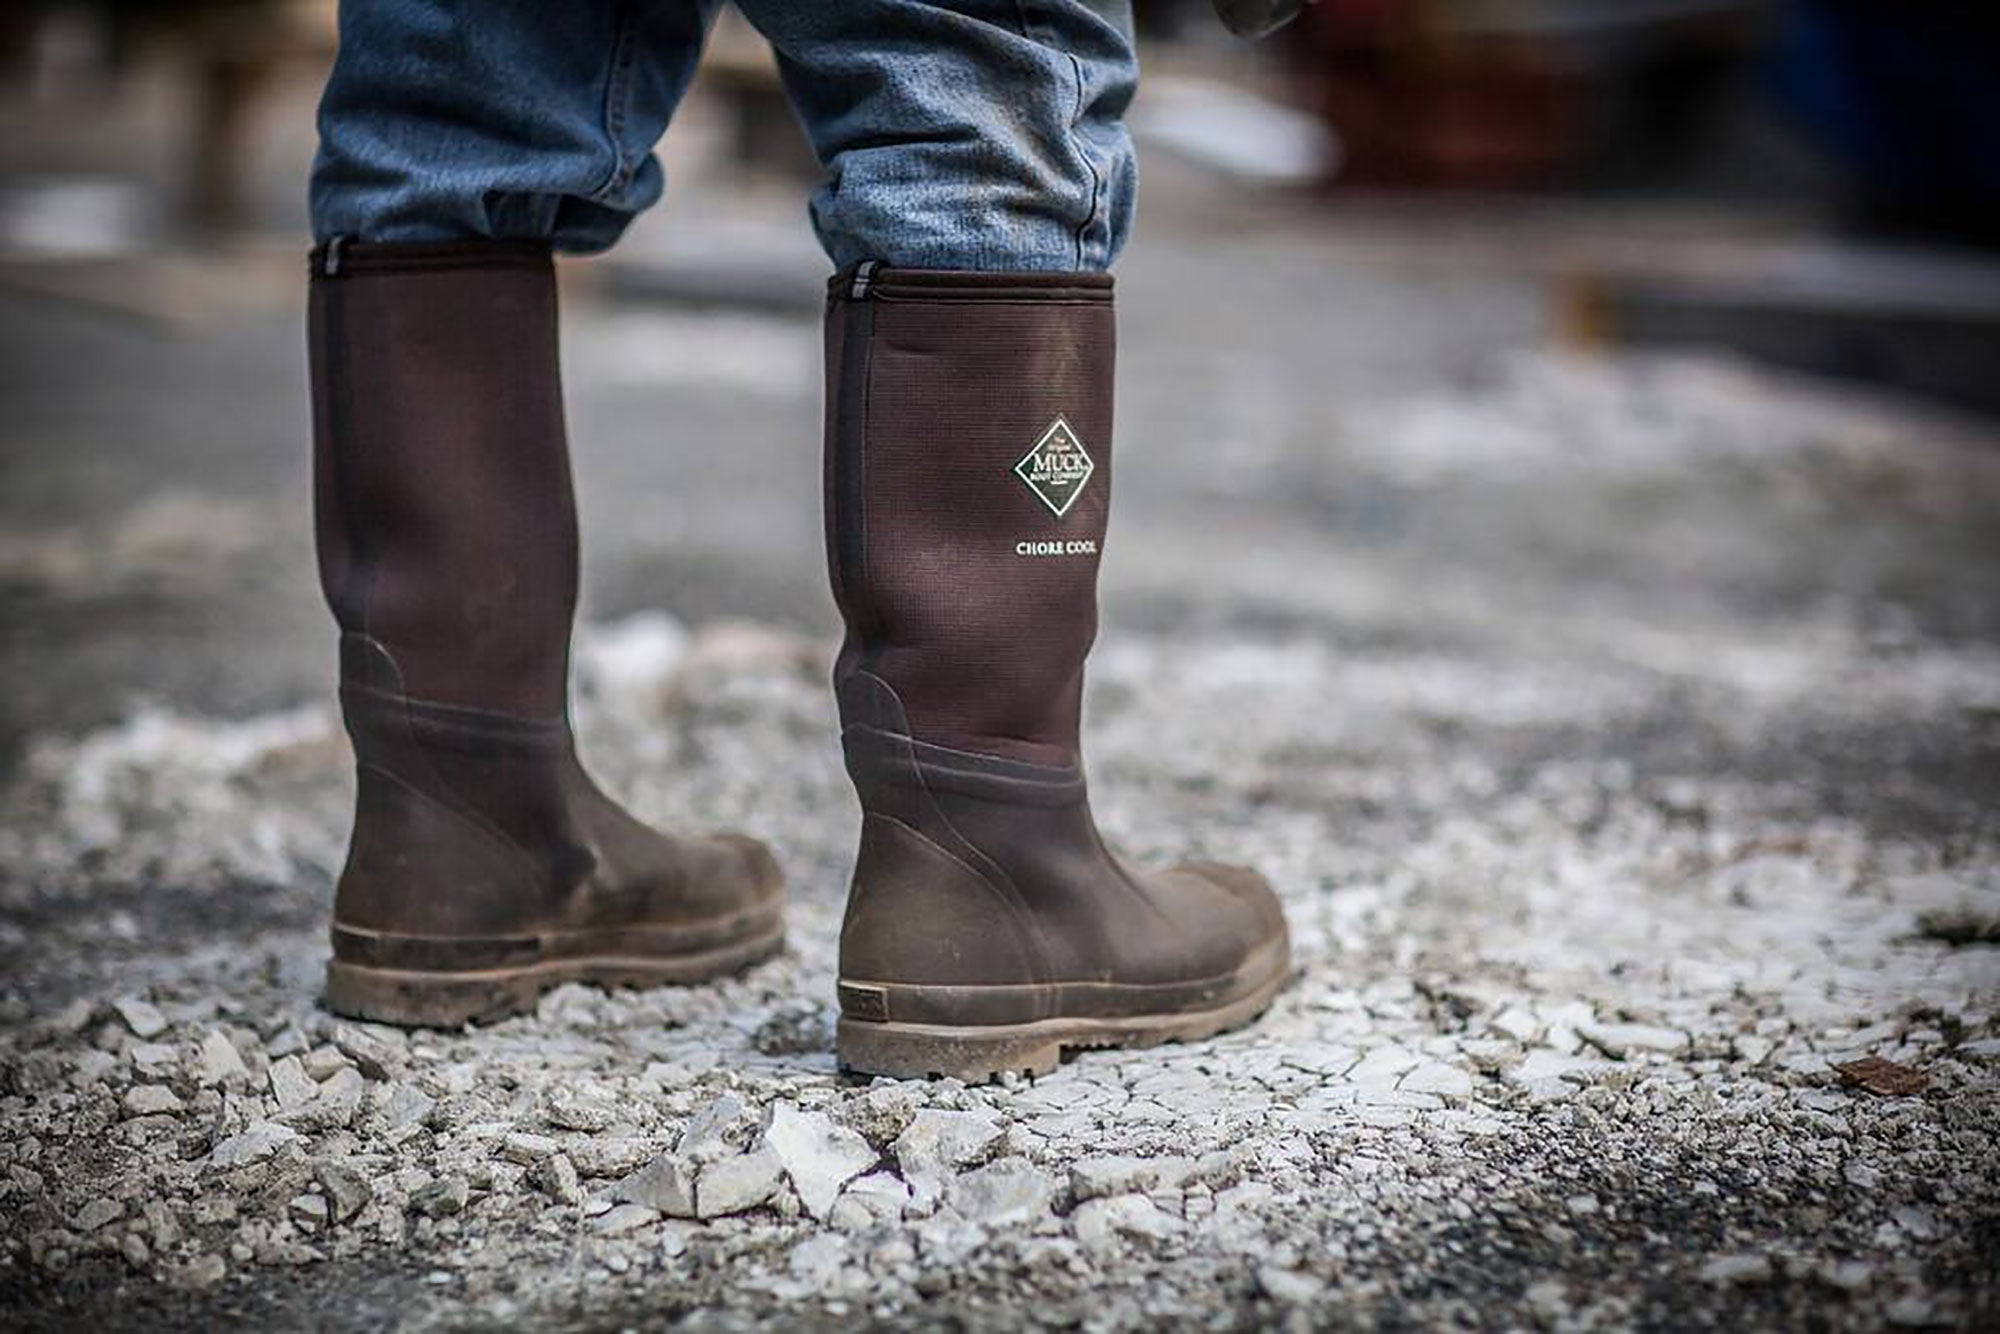 arctic pro steel toe muck boots